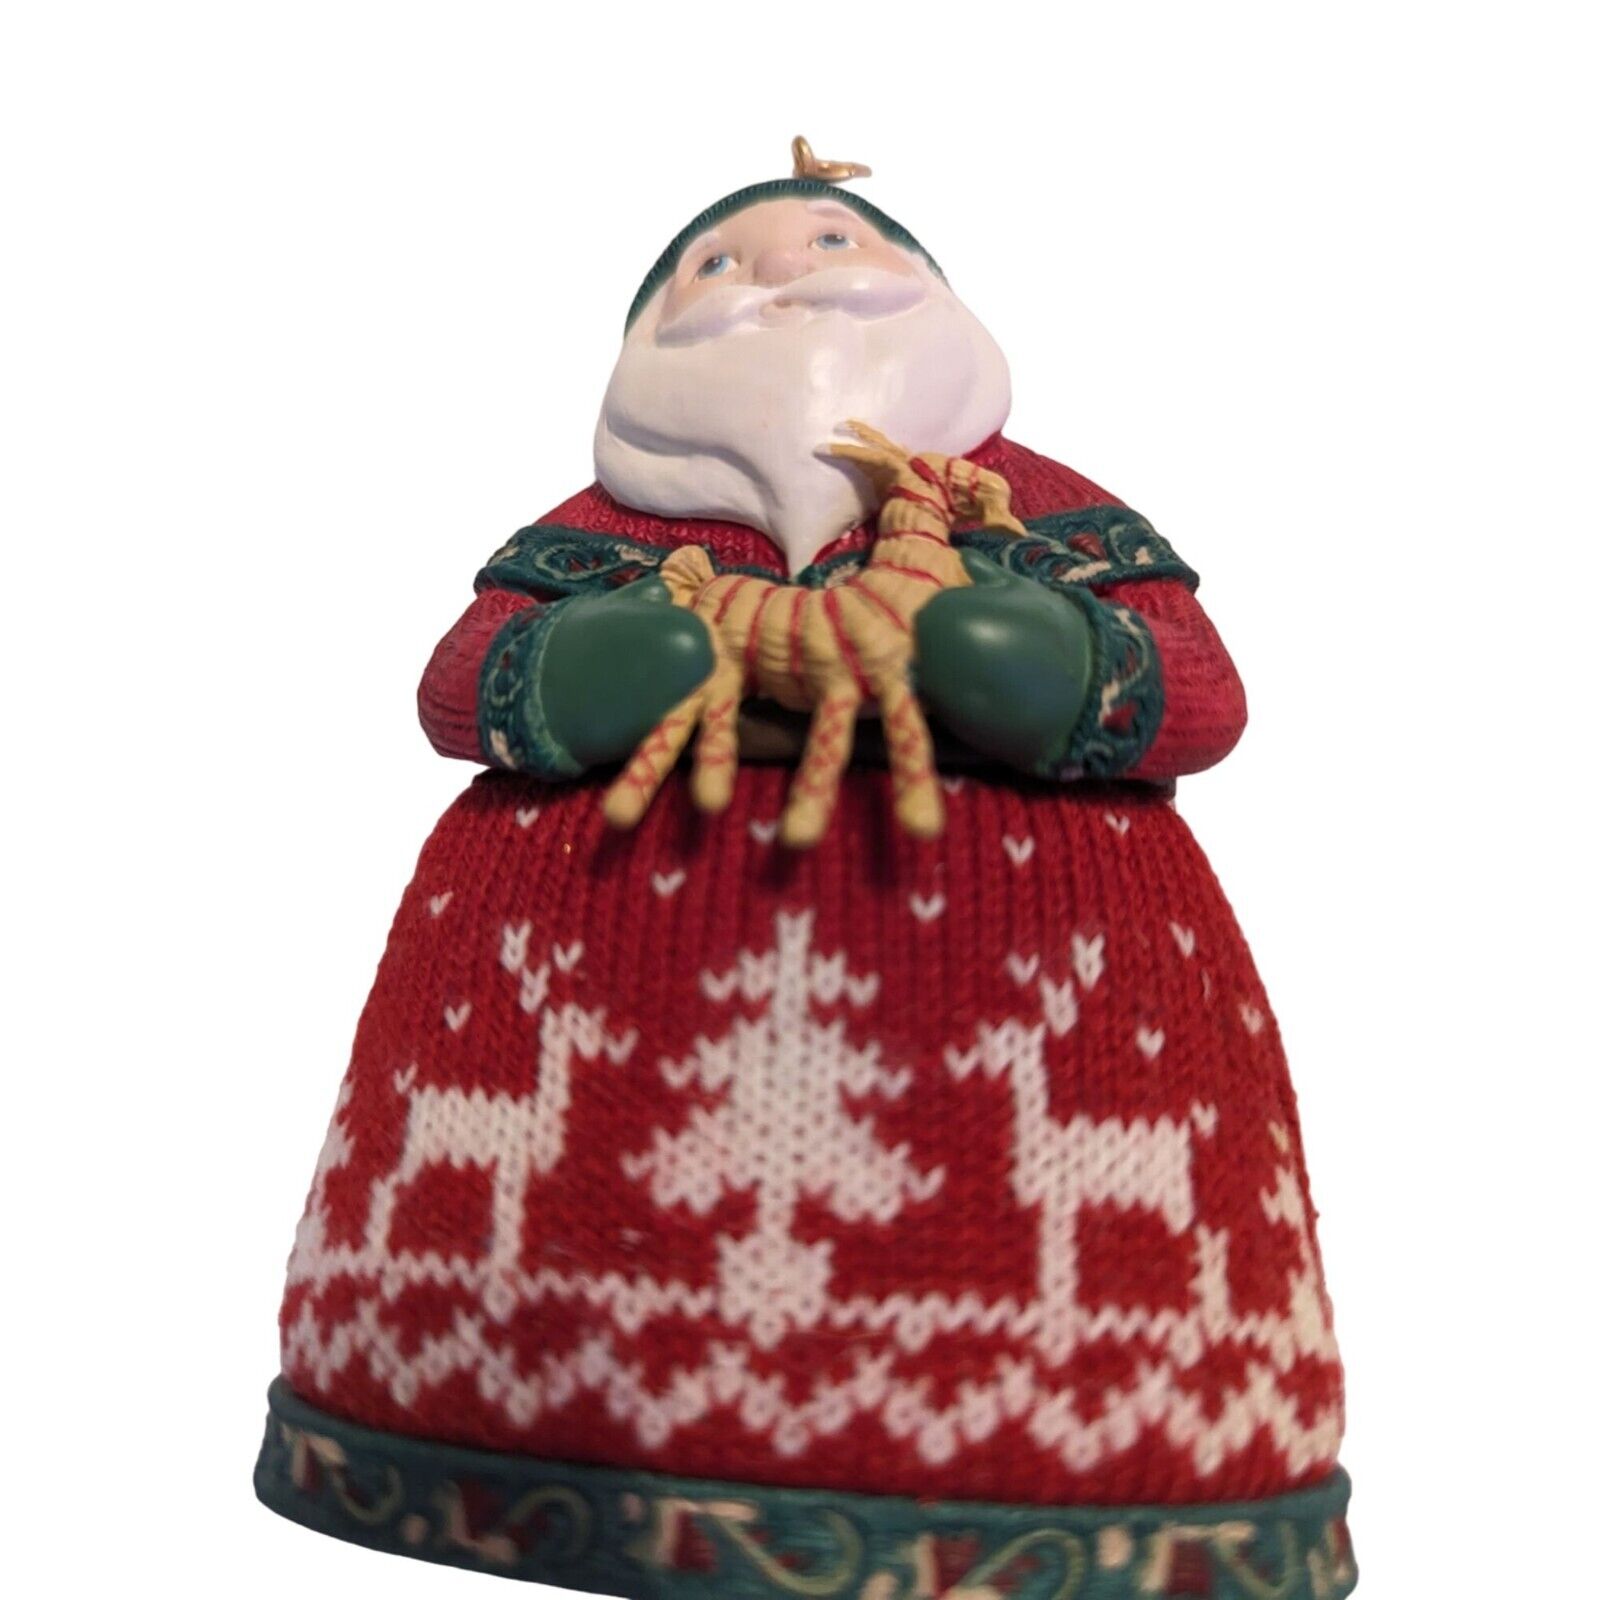 2004 Hallmark Santa\'s around the World Keepsake Ornament - Norway fabric resin